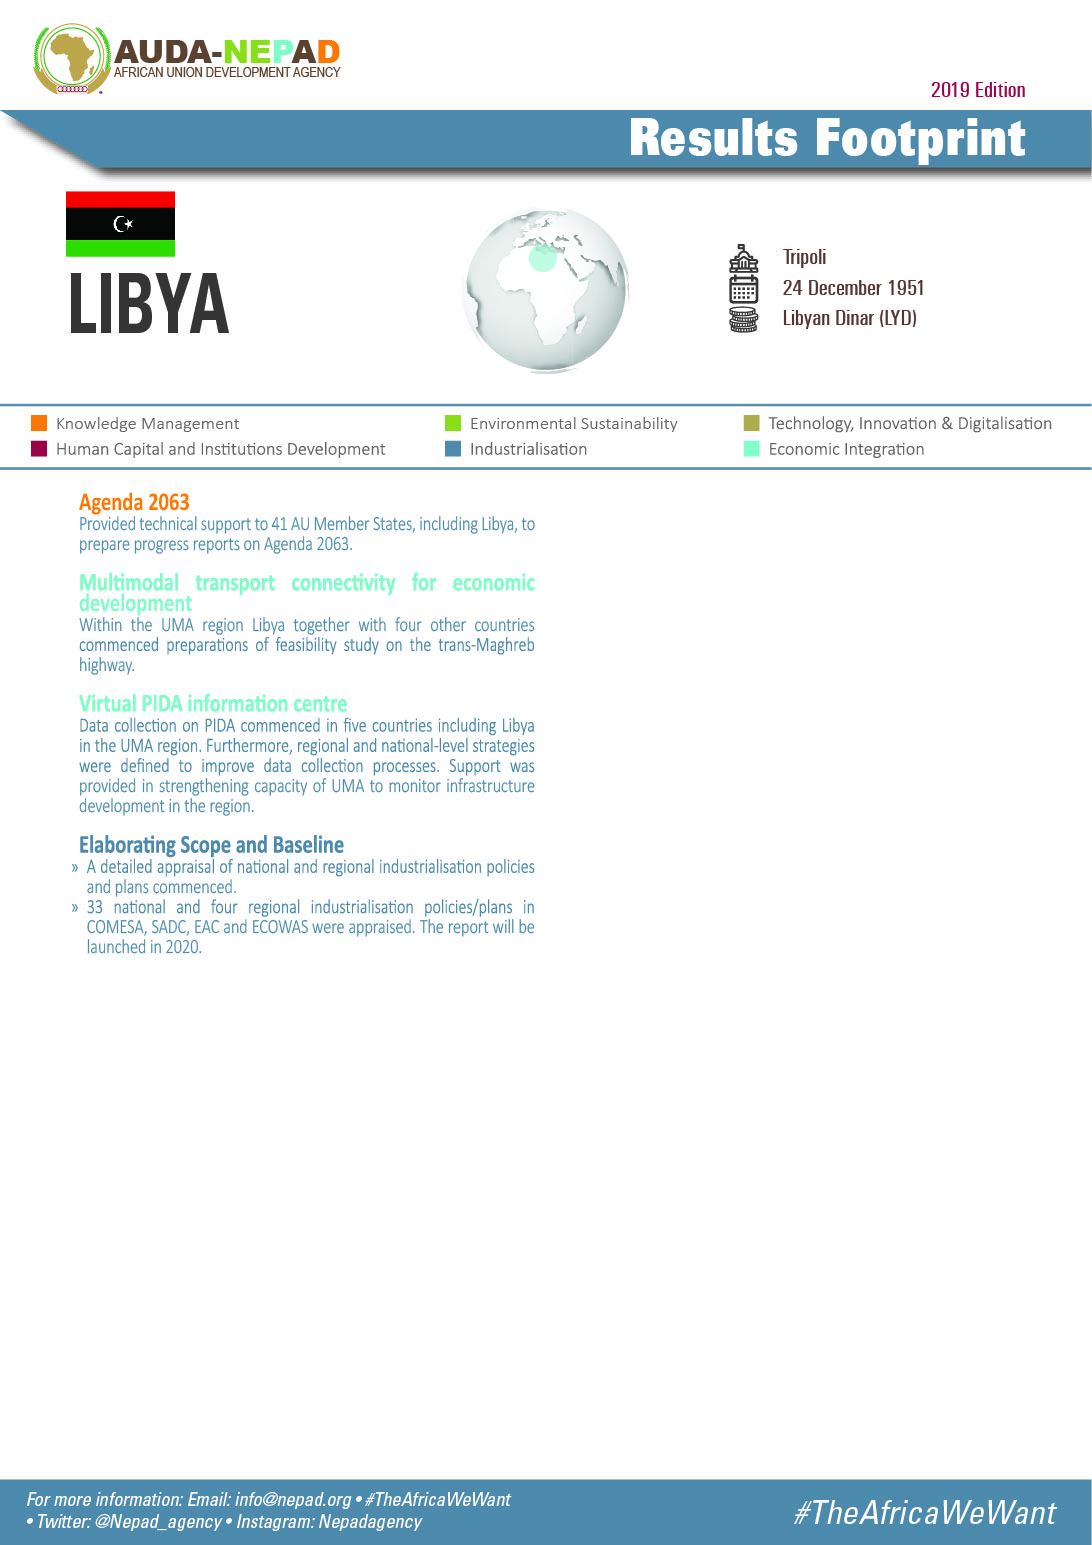 2019 AUDA-NEPAD Footprint: Country Profiles: Libya